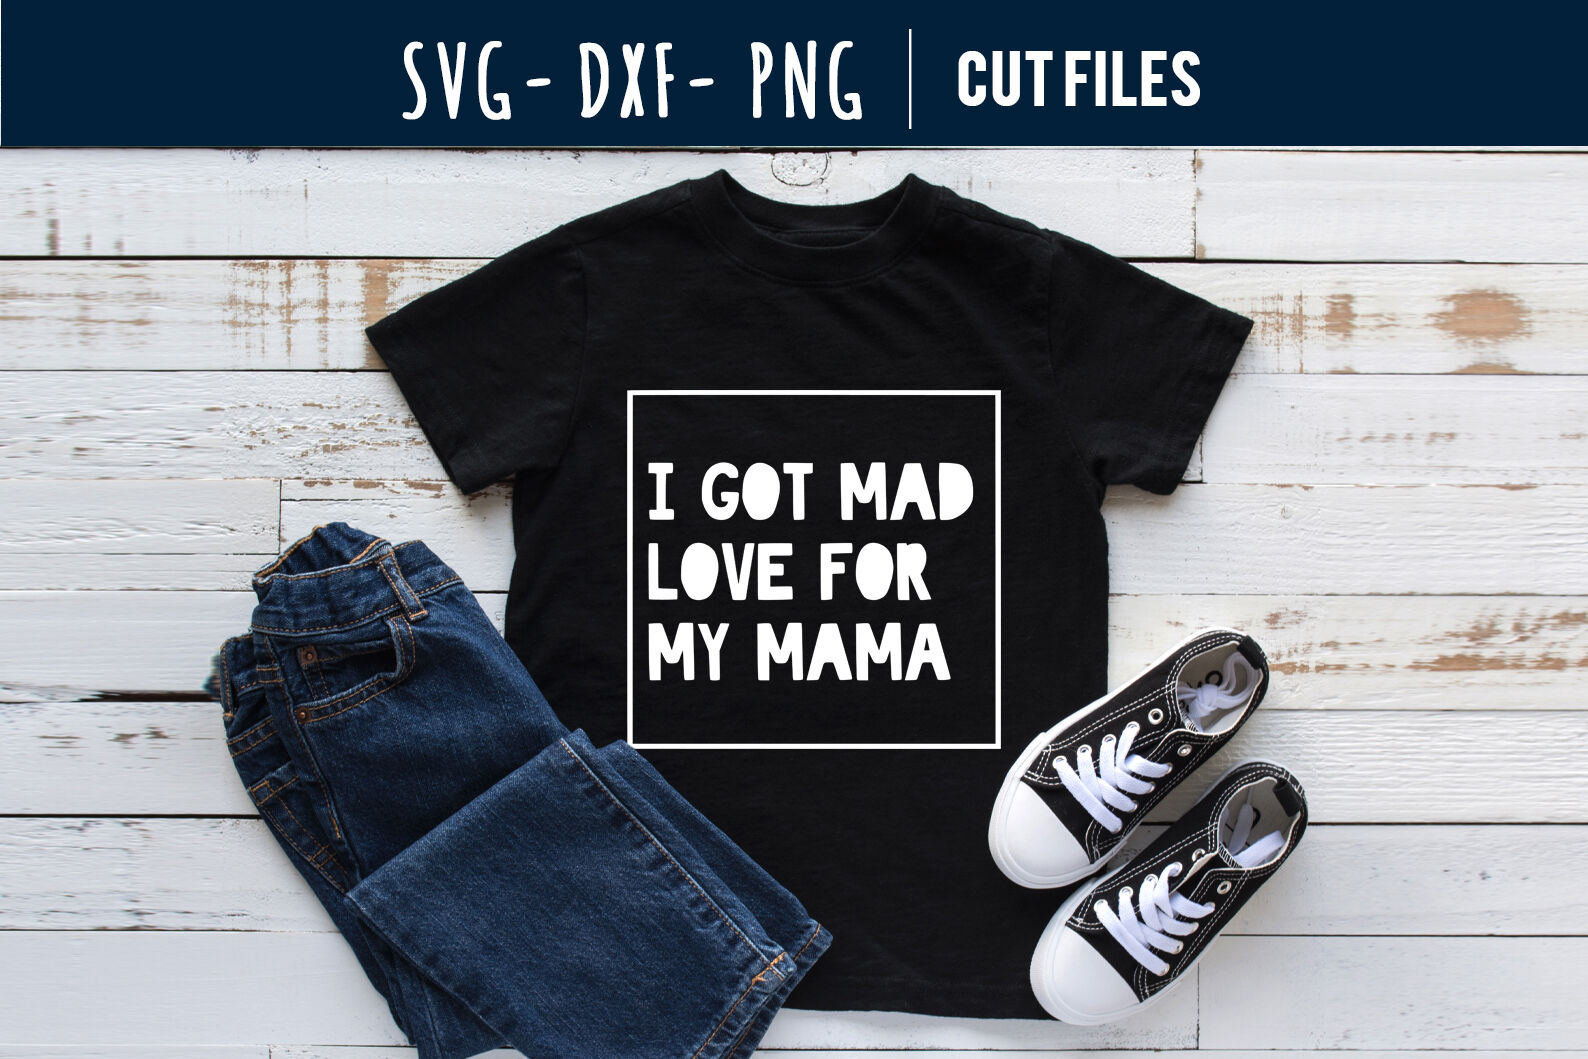 Pocket Cut Out PNG & SVG Design For T-Shirts